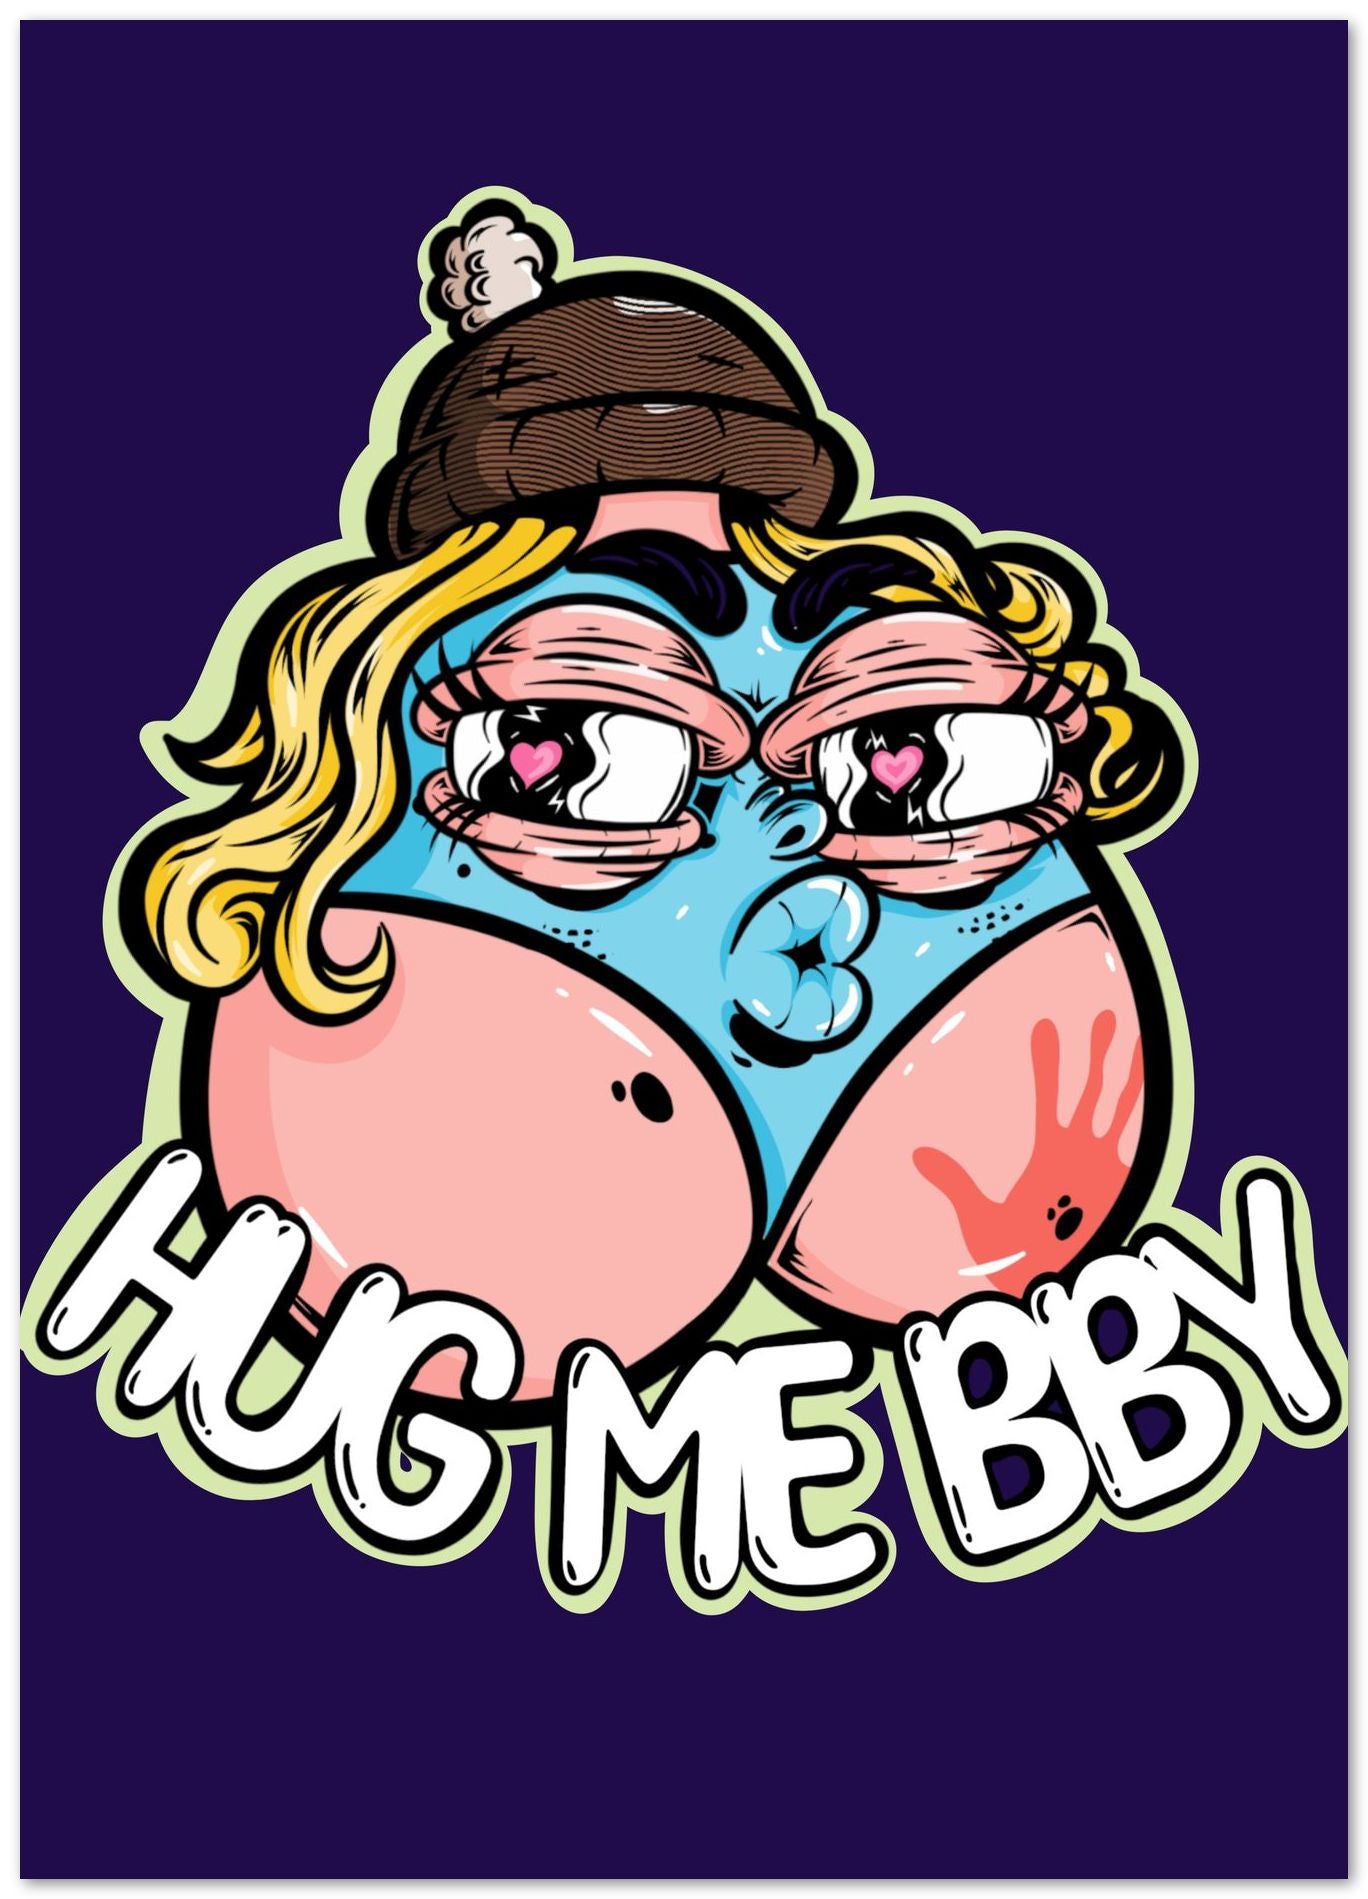 HUG ME BBY - @Satrias